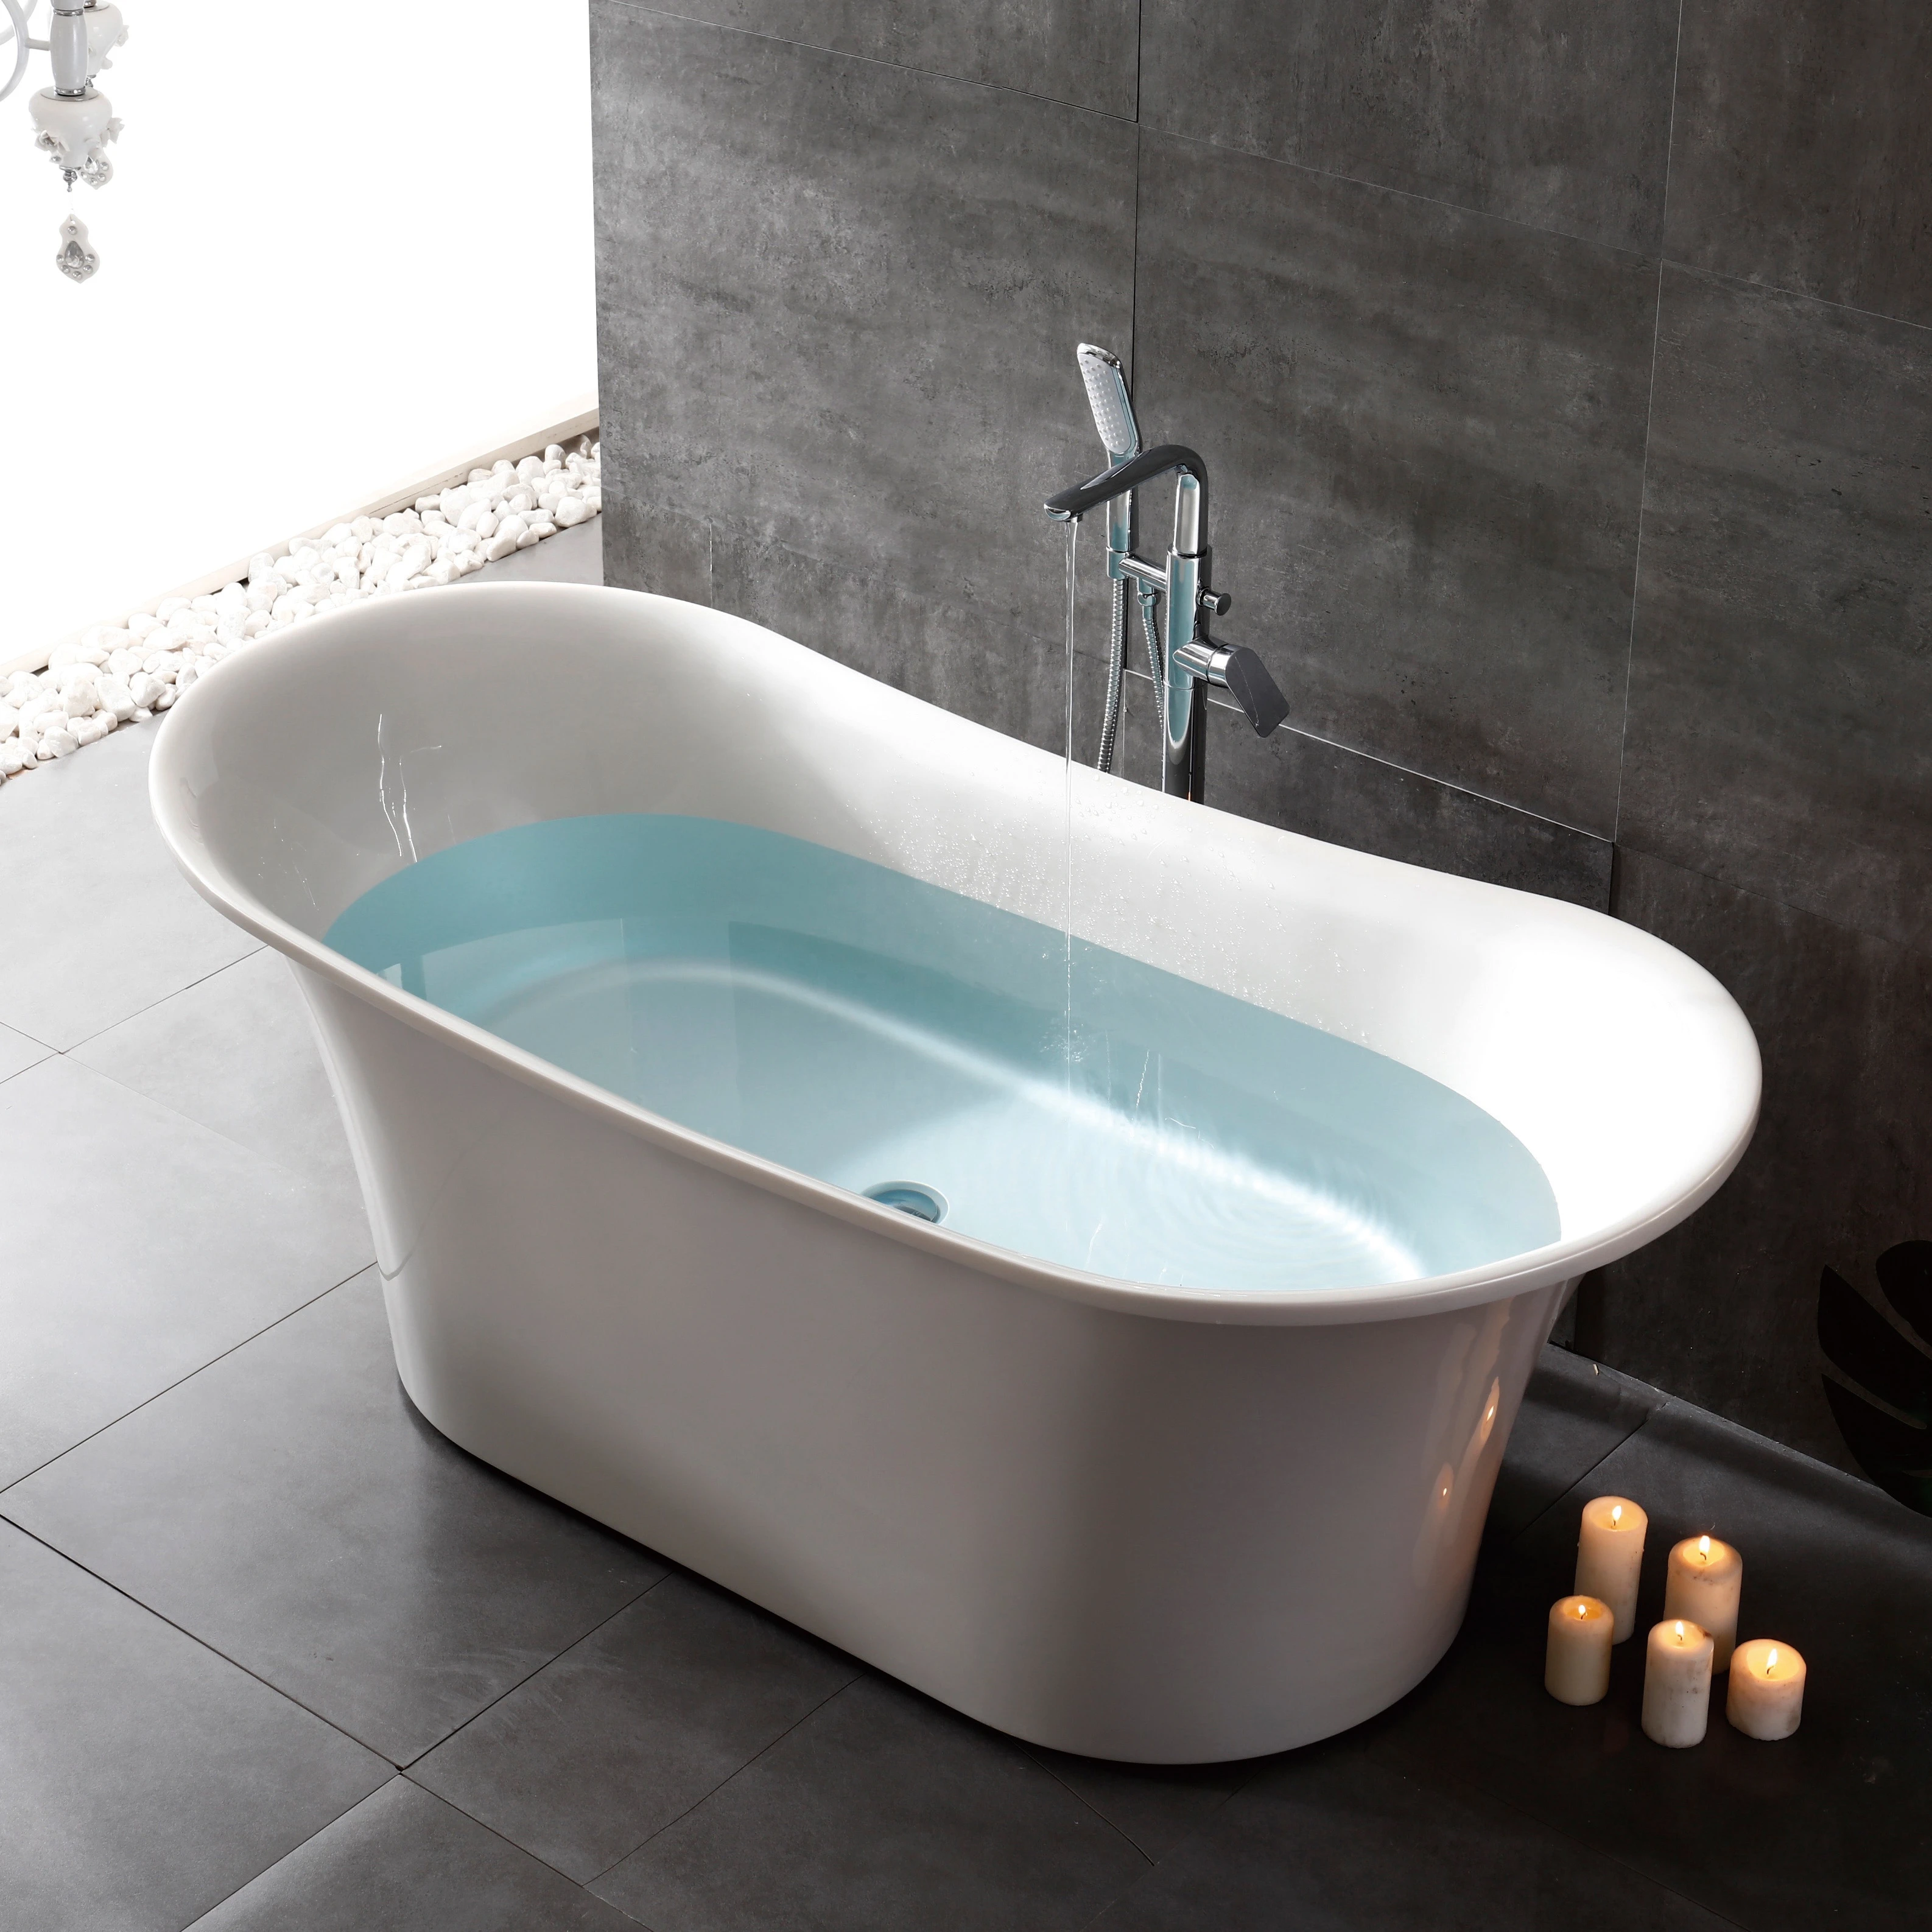 Hotel modern cheap solid surface oval freestanding bronze bath tub european style soaking bathtub